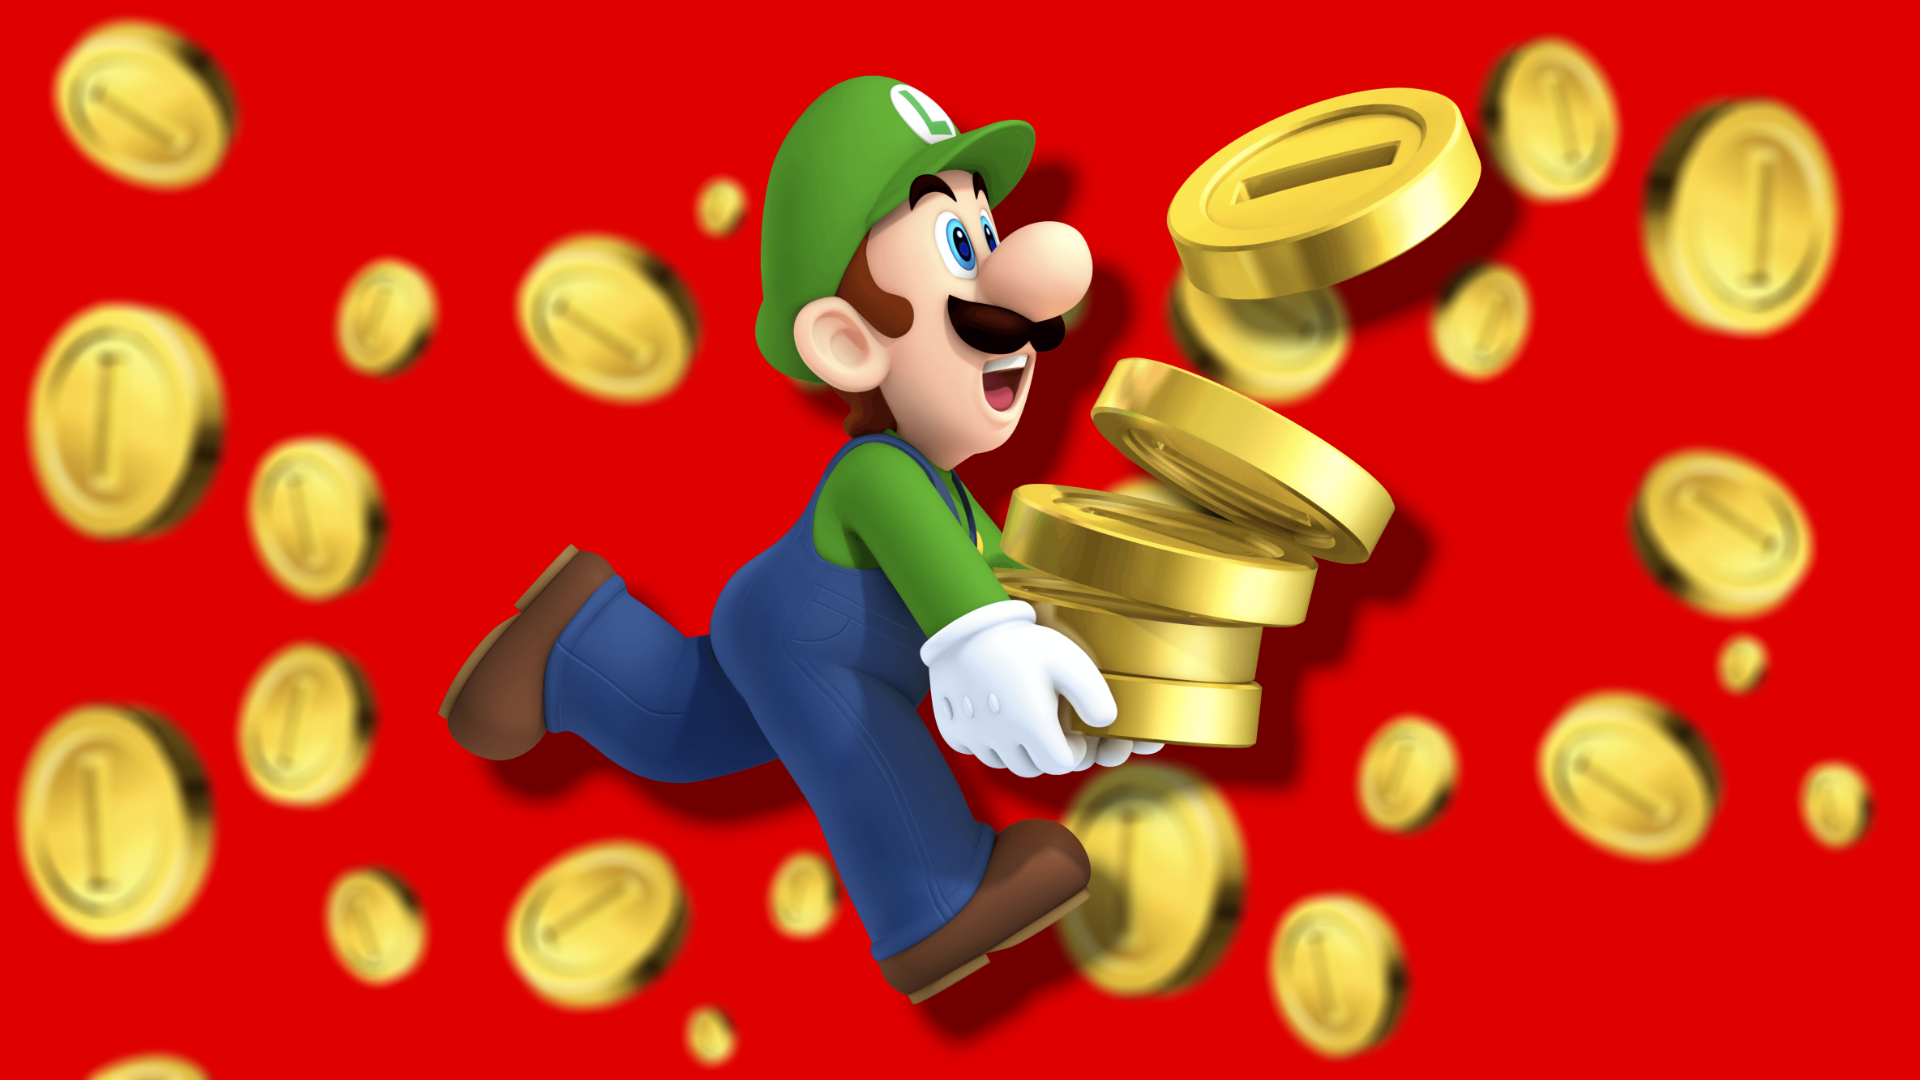 Nintendo is now Japan’s richest company KitGuru